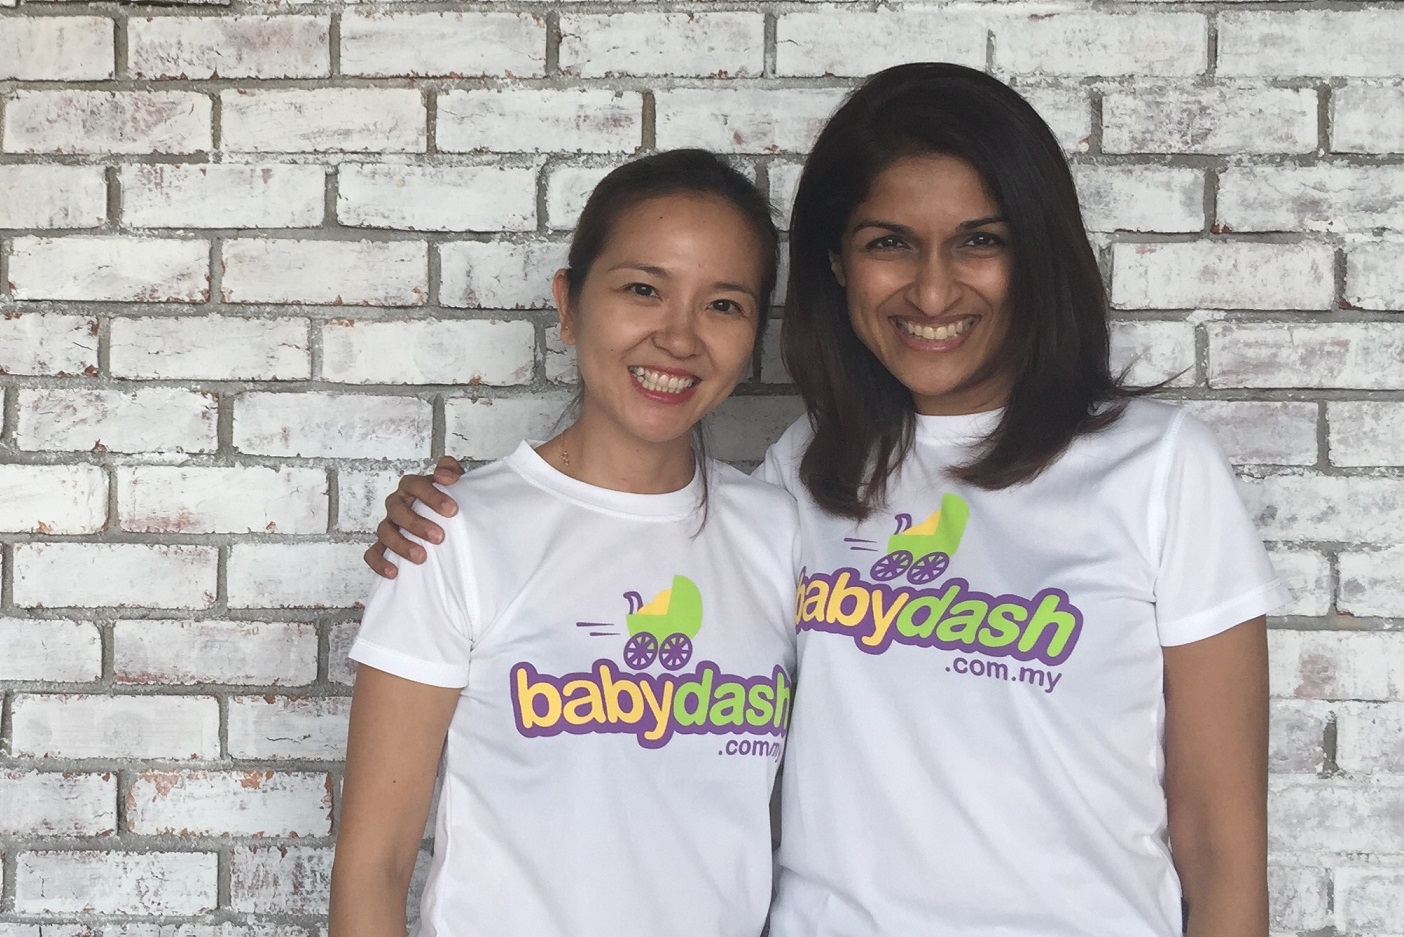 Babydash breaks Malaysian equity crowdfunding record